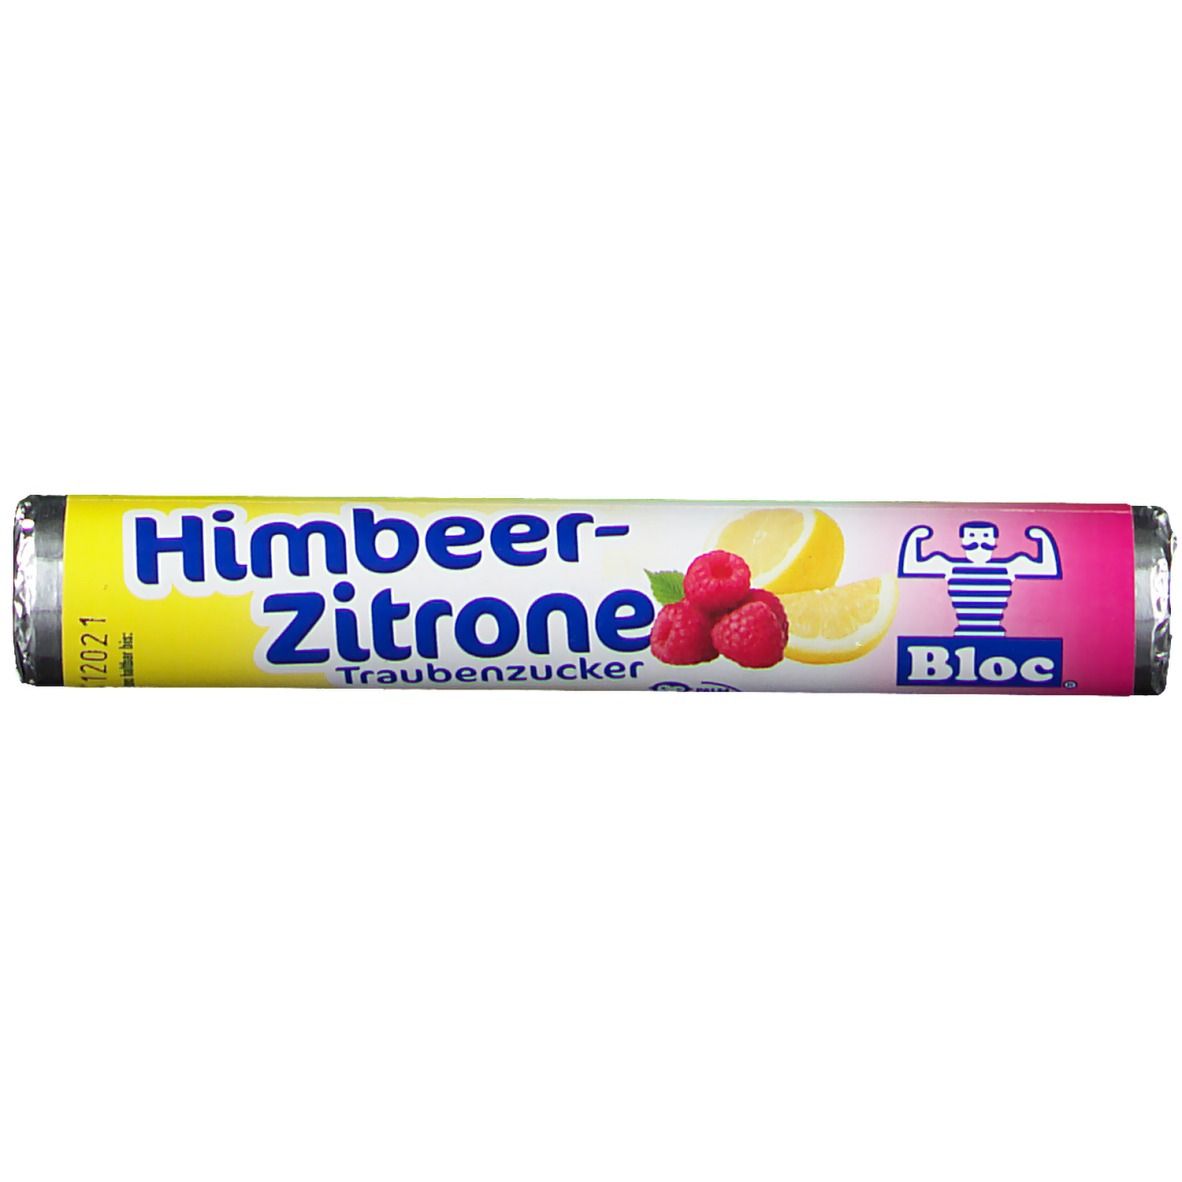 Bloc® Traubenzucker Himbeer-Zitrone